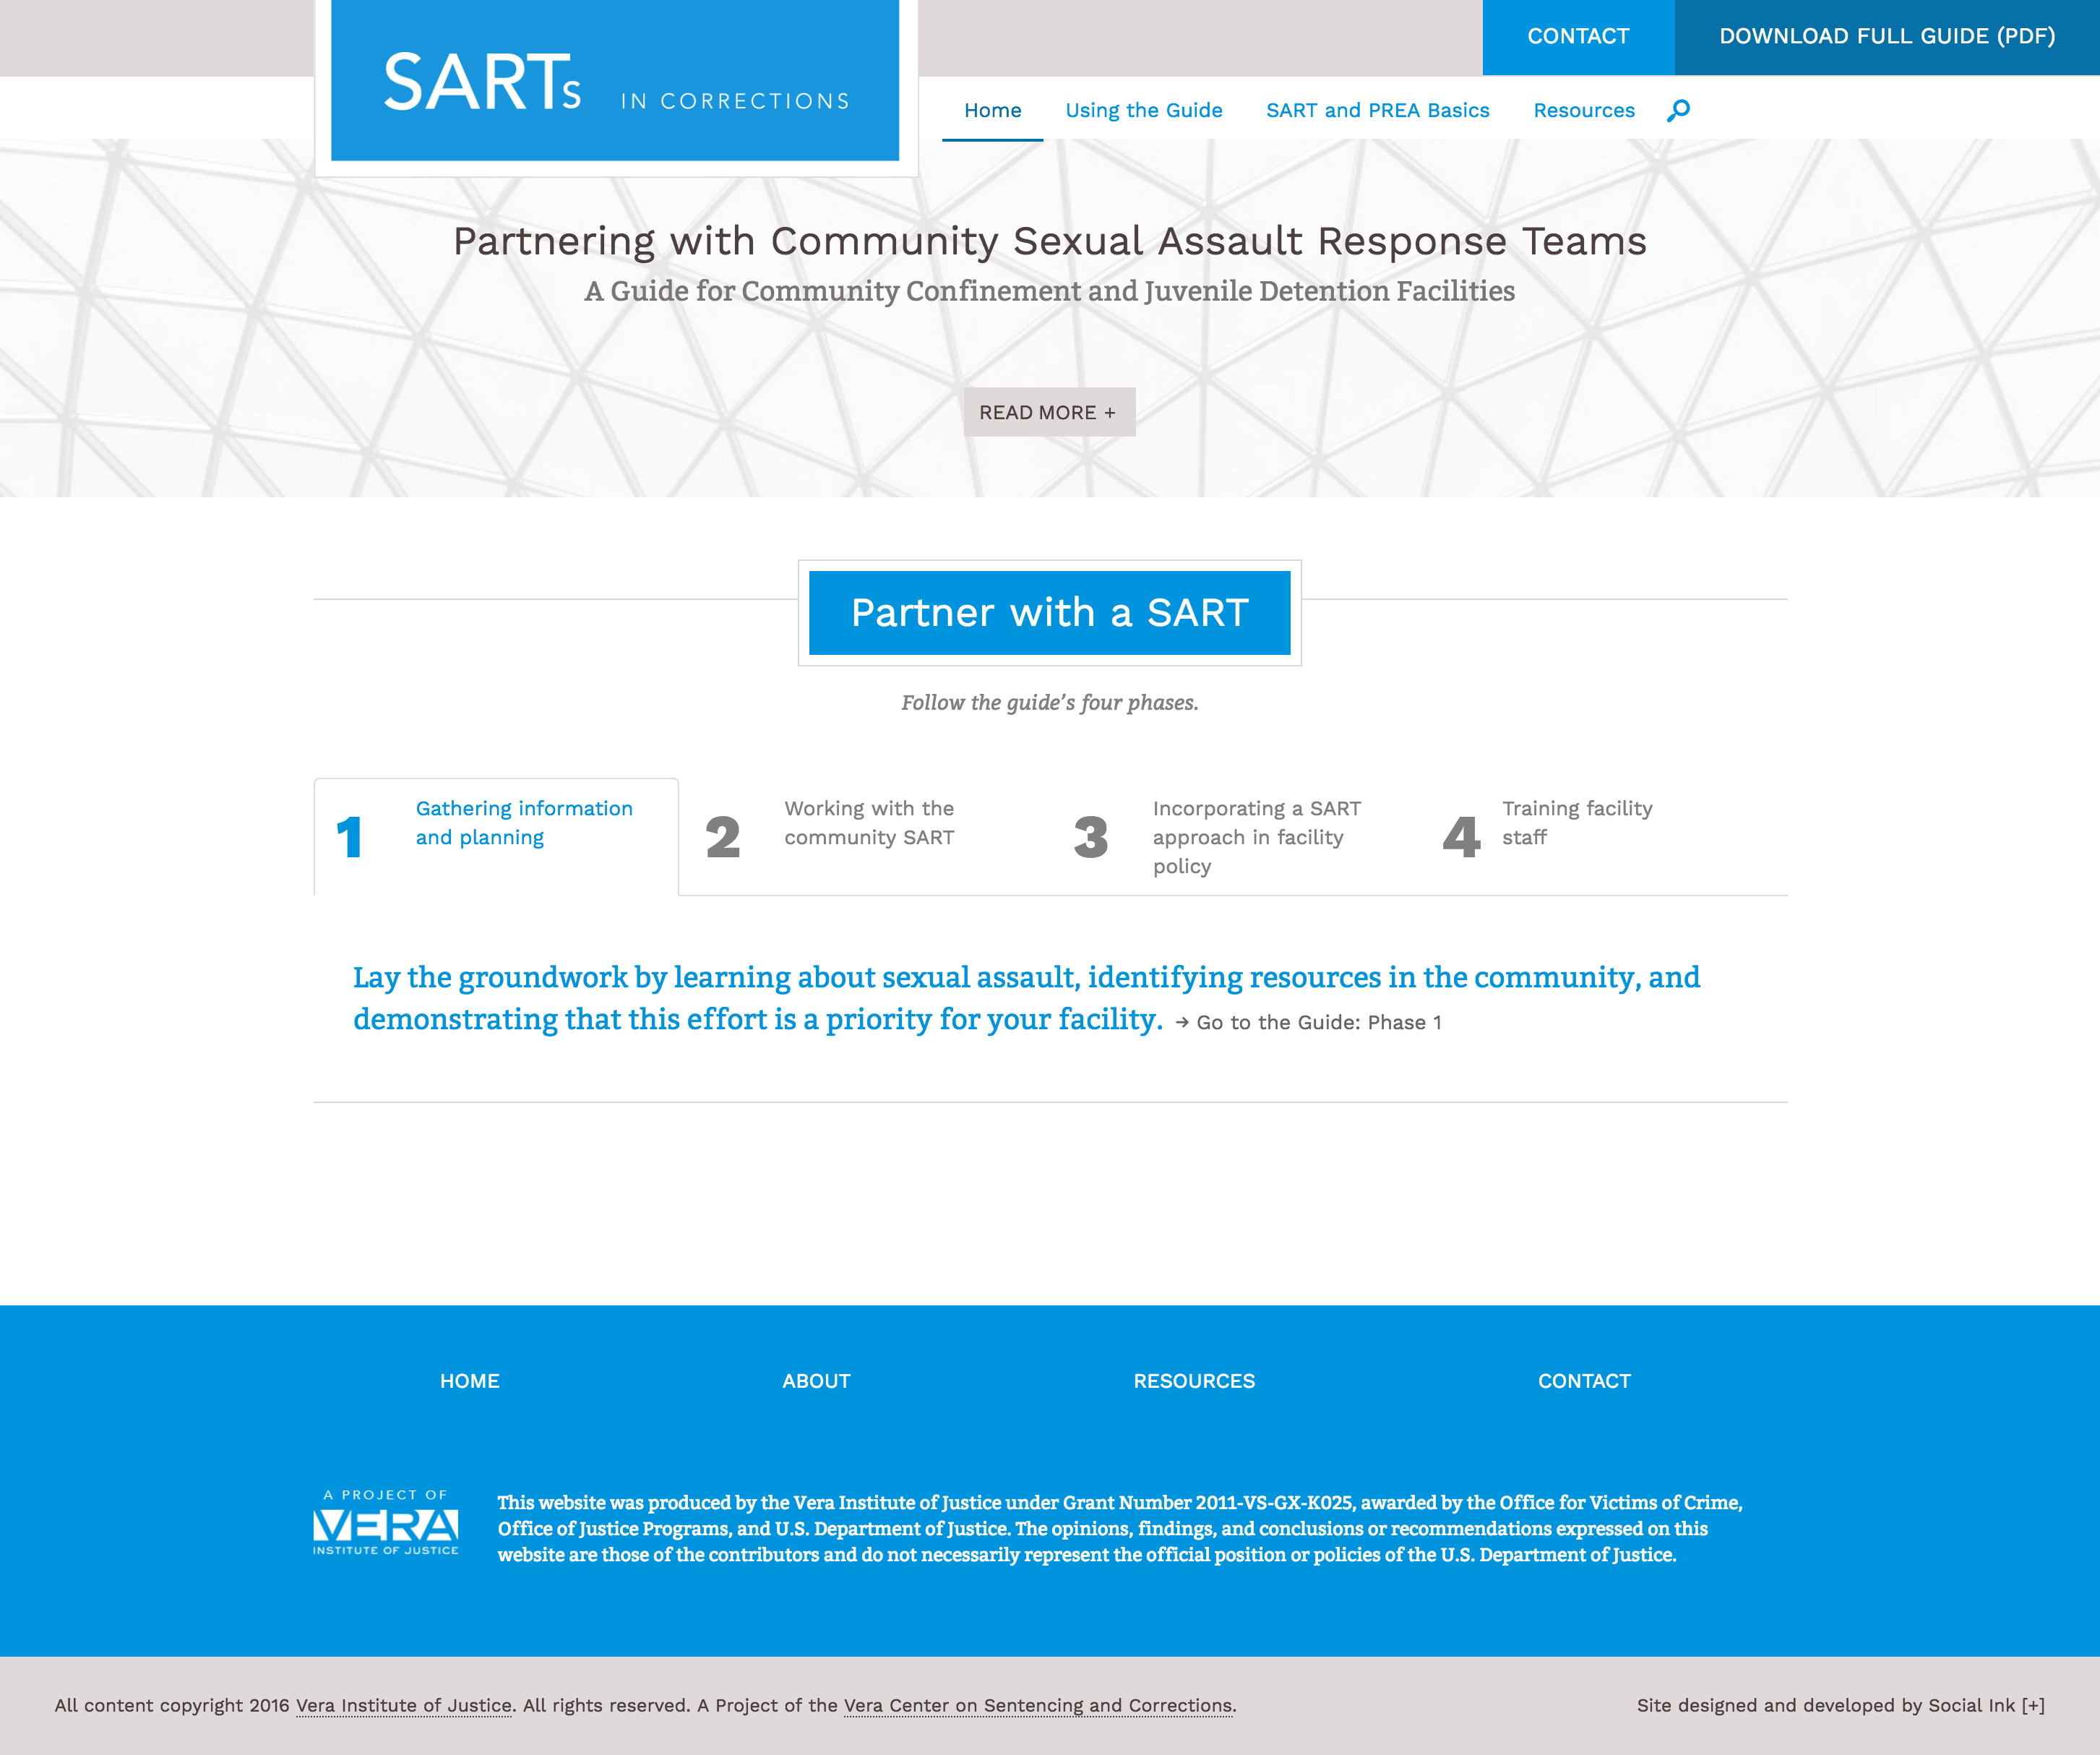 Vera Institute of Justice--SARTs in Corrections: SARTS Homepage